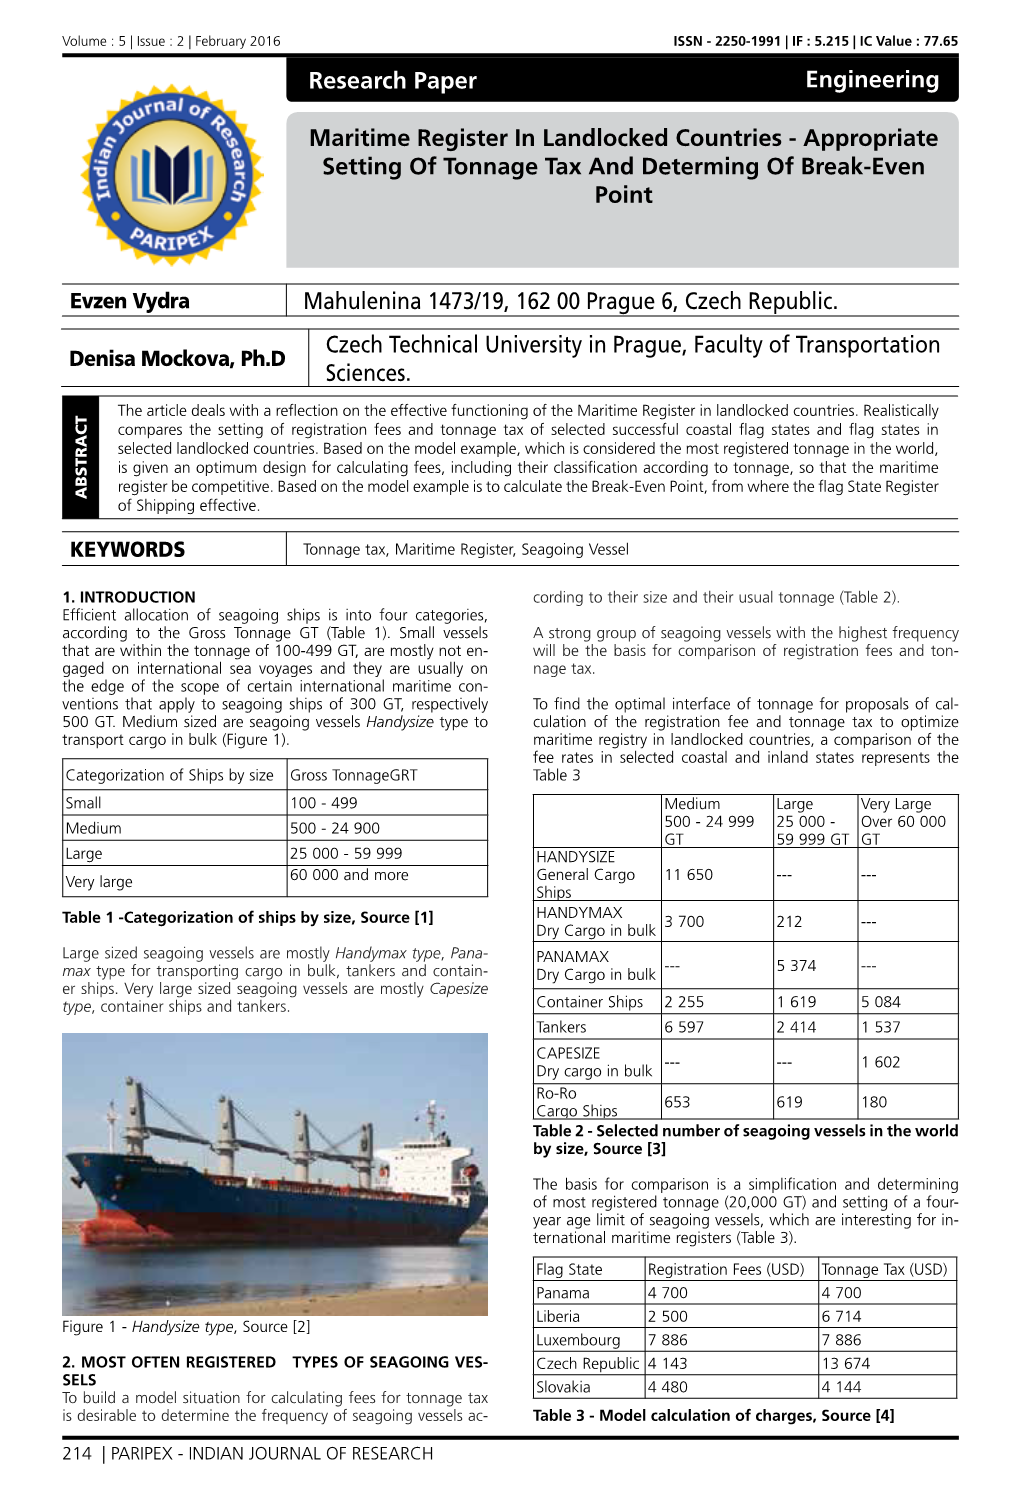 Research Paper Maritime Register in Landlocked